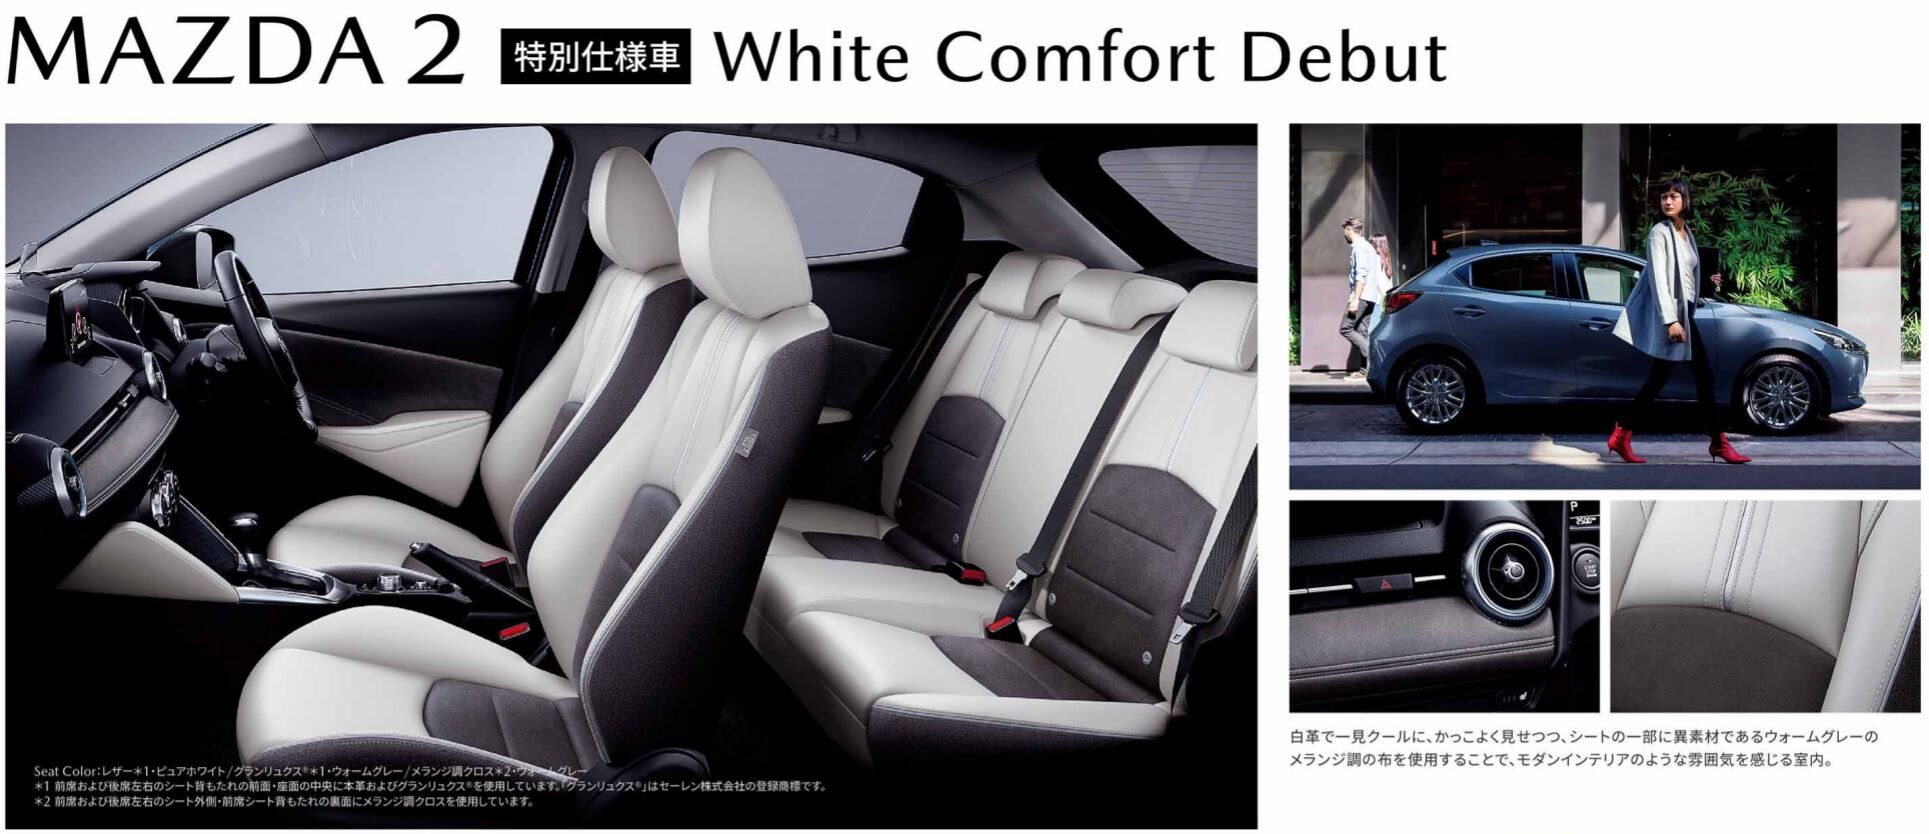 Mazda2 特別仕様車 White Comfort が登場しました 外装色 ポリメタルグレー も追加 K Blog Next